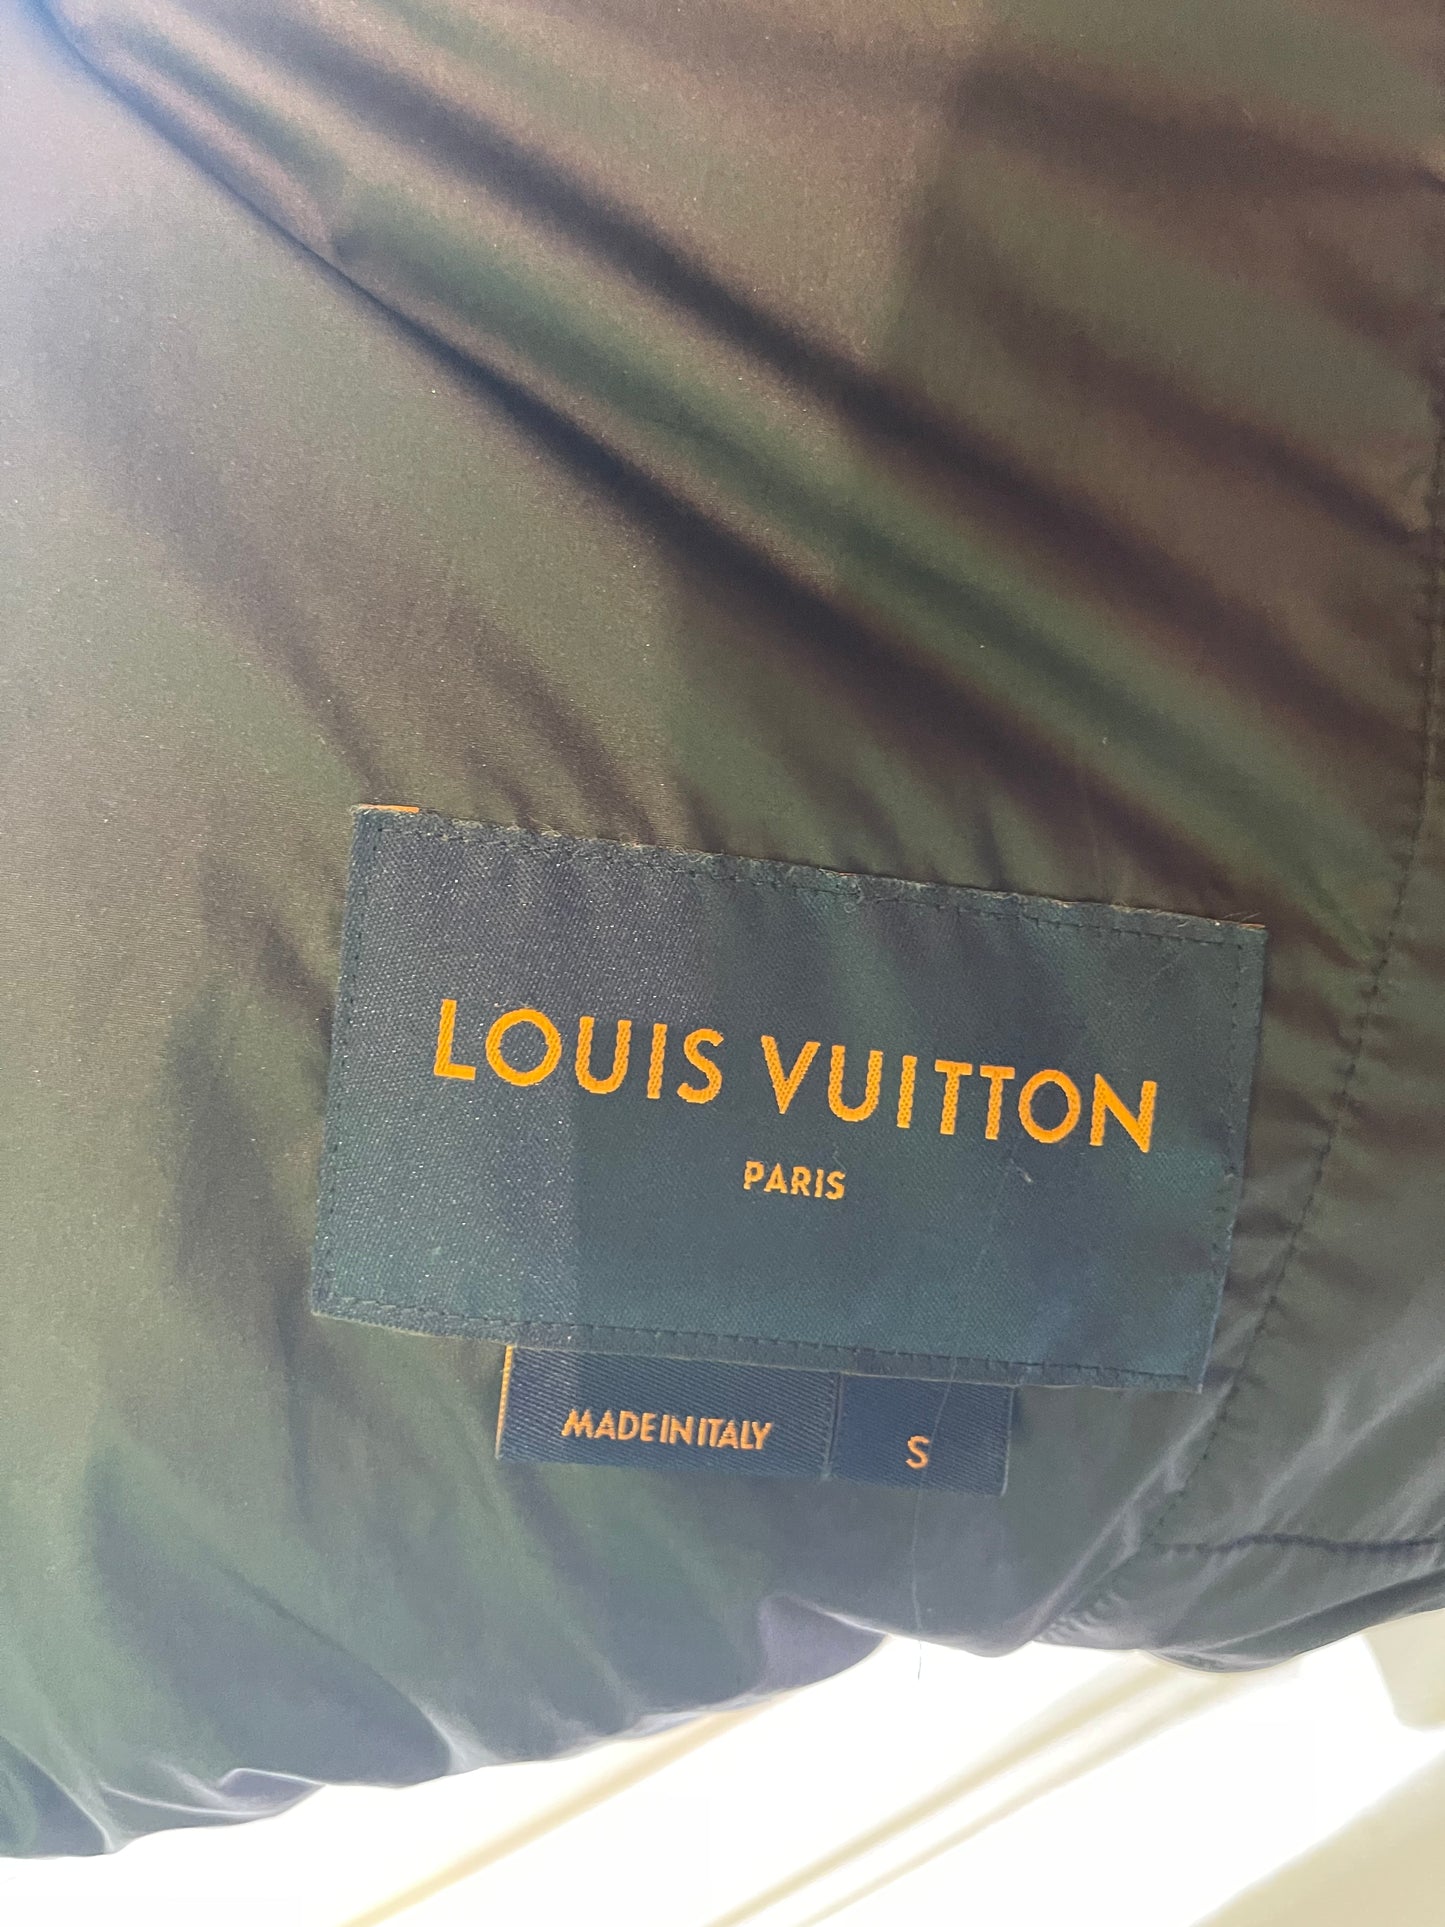 Louis Vuitton "Boyhood" Black leather puffer Jacket